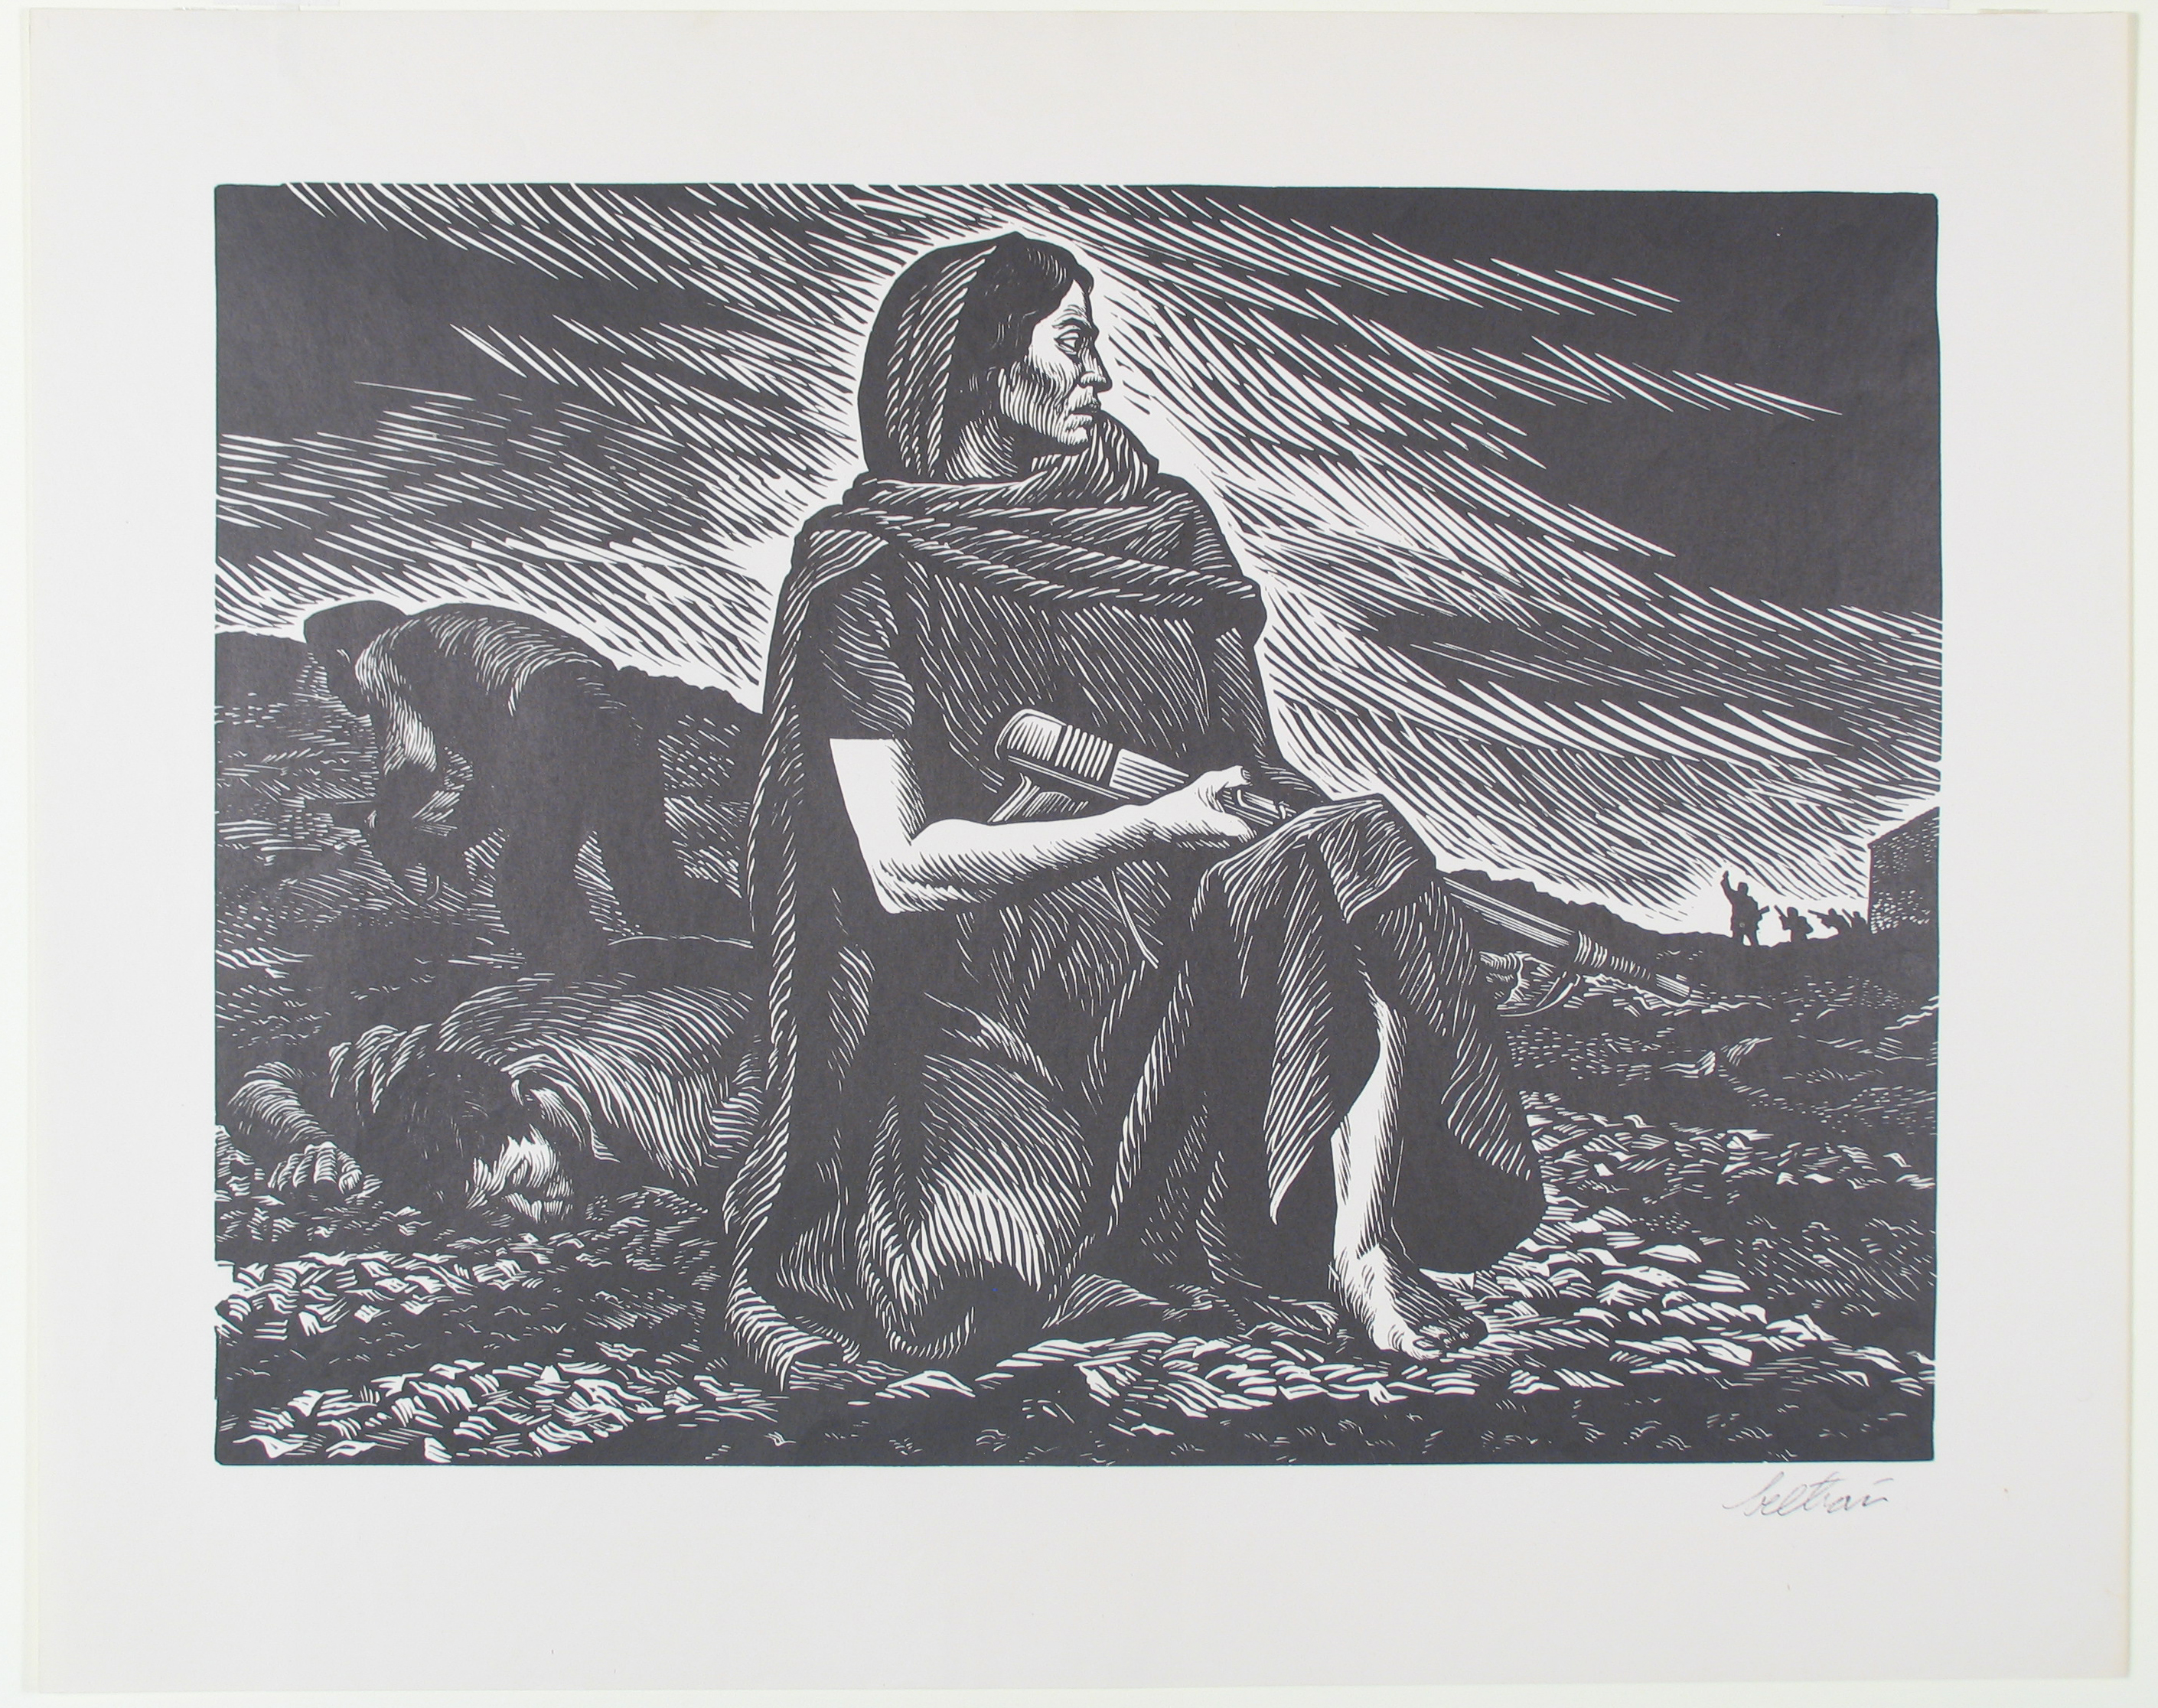 Image Credit: Alberto Beltrán, “Manuela Sanchez, Spanish guerilla–mujeres con la revolución,” c. 1950, linoleum print, 16 x 20 in. Gift of Dr. and Mrs. Jules Heller.